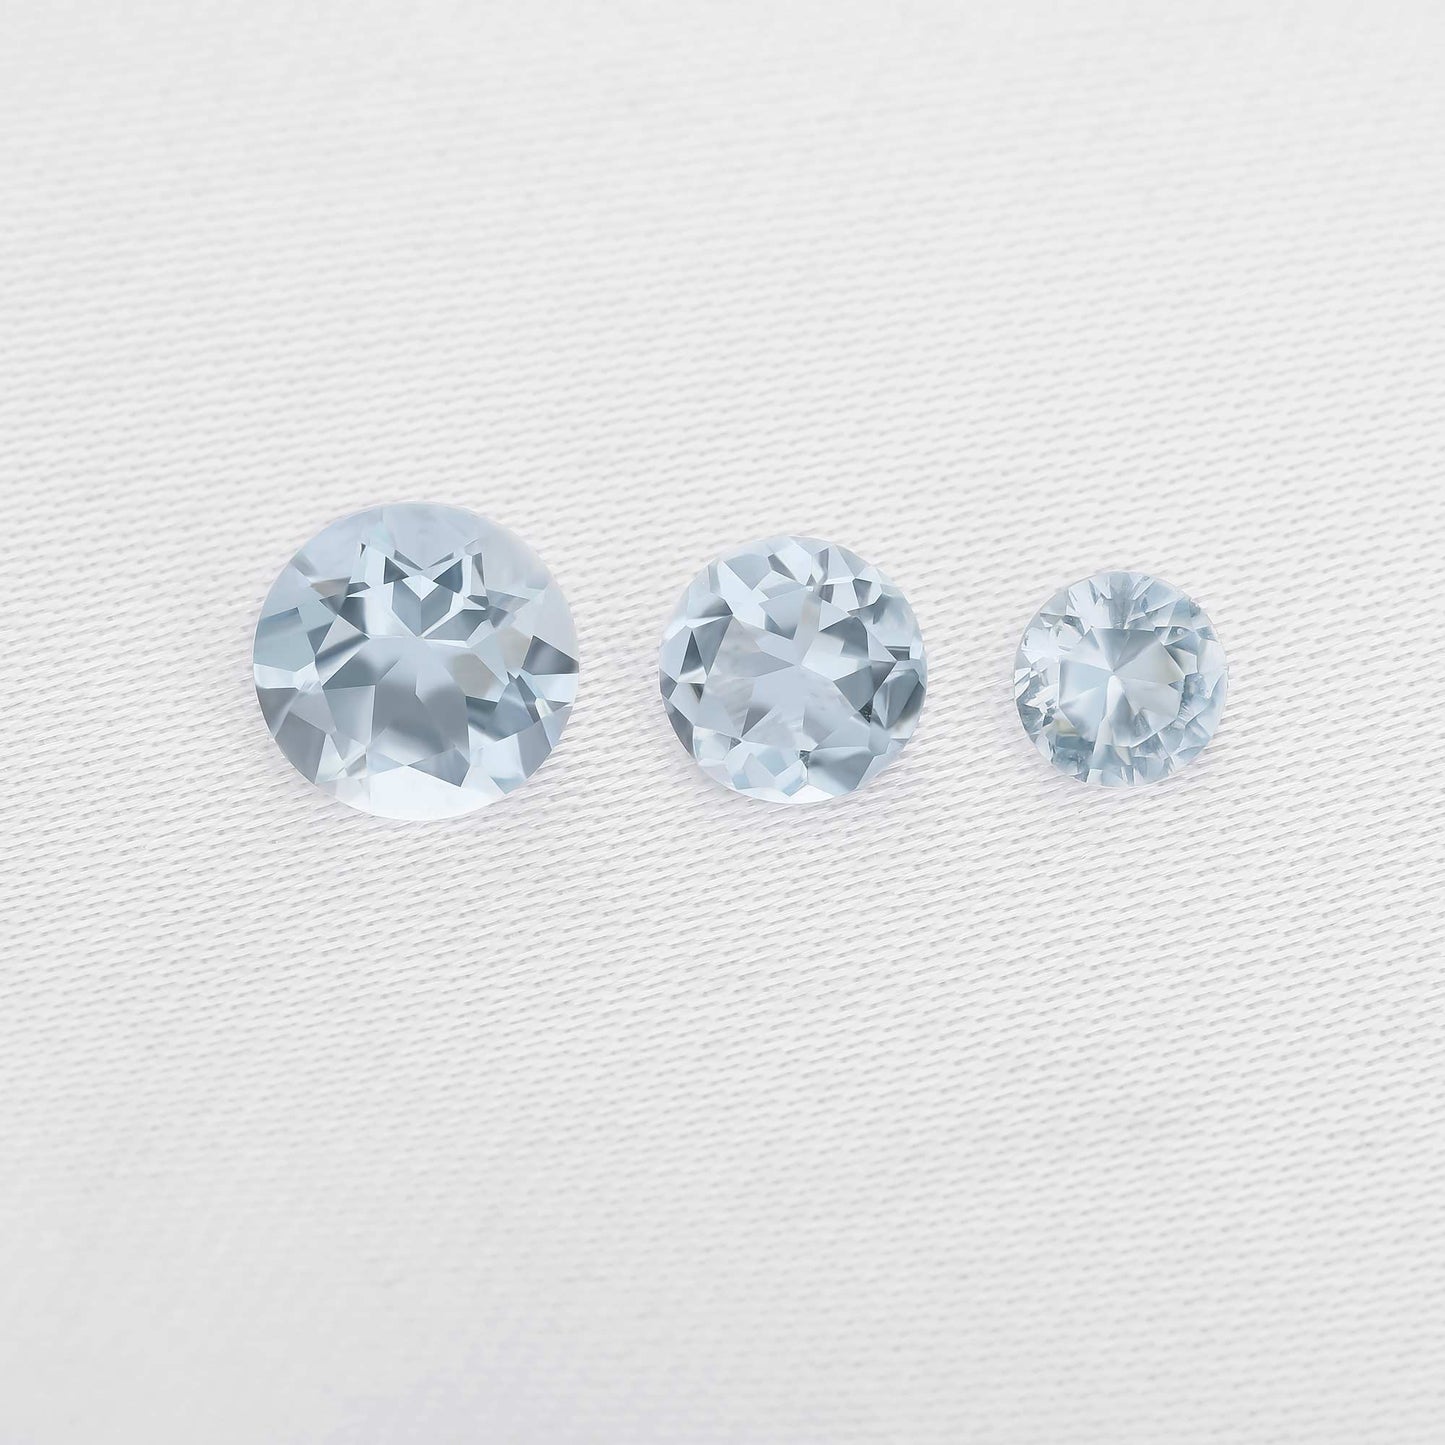 3 round cut light blue aquamarine gems.